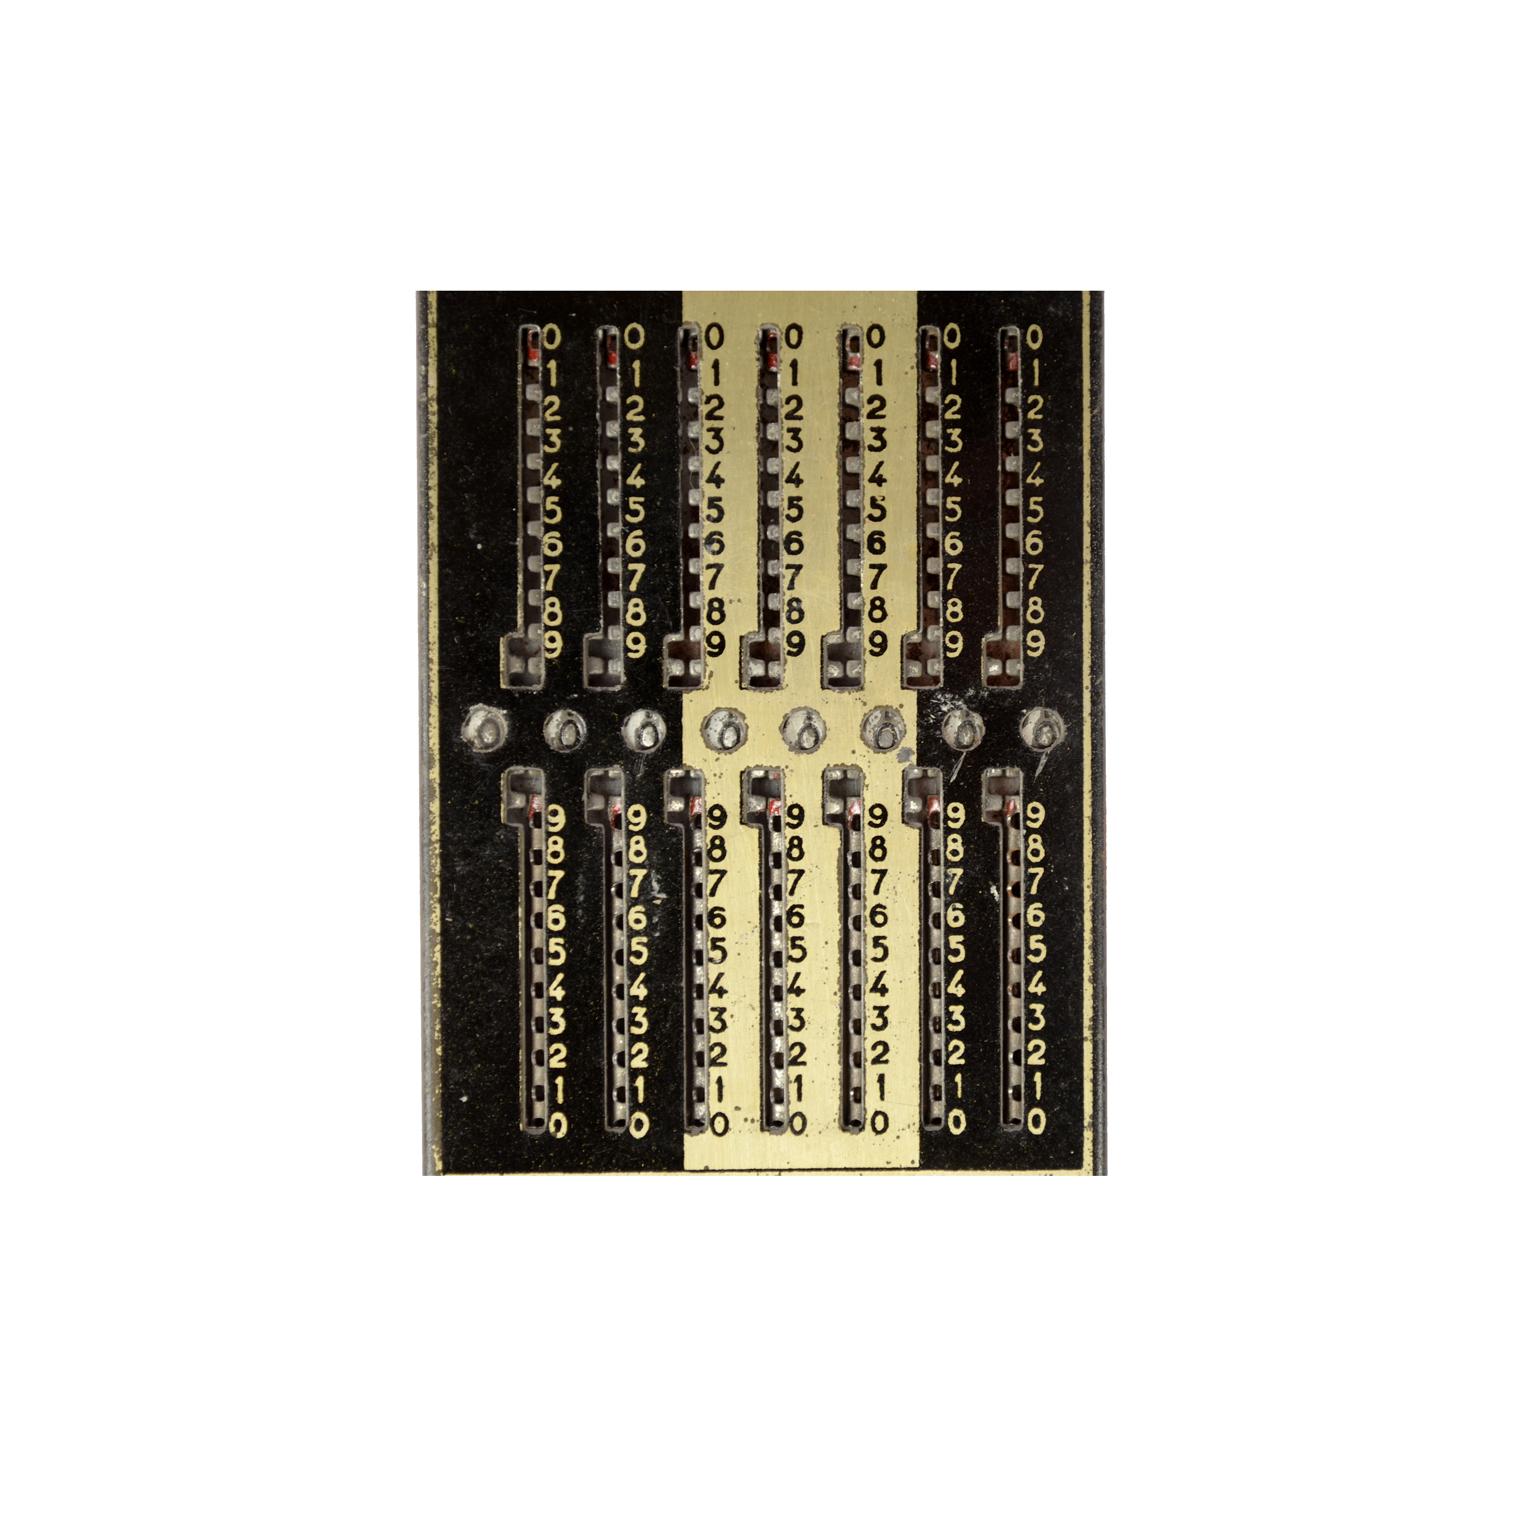 Super-Simplex Calculator Italian Manufacture of the 1920s 7